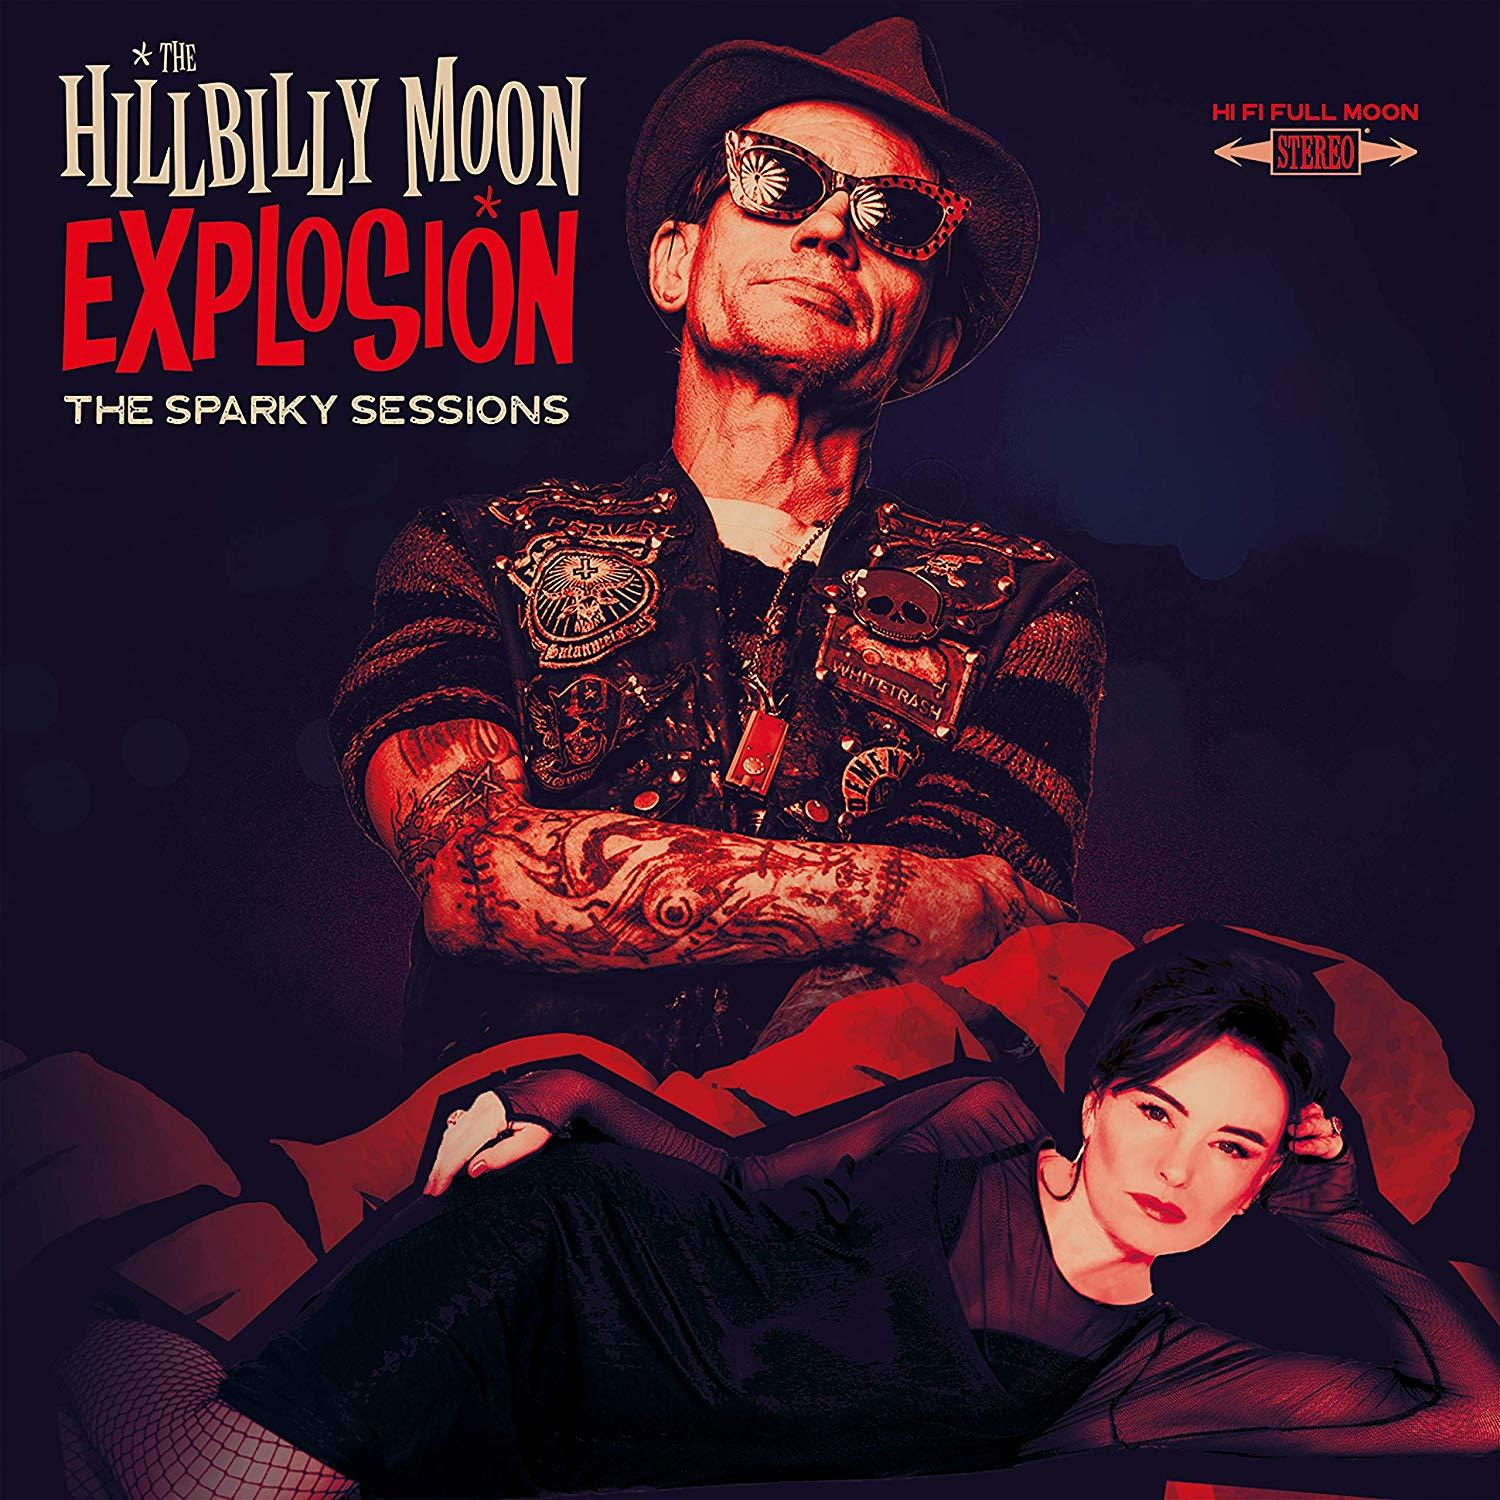 Moon Hillbilly - (Vinyl) Explosion Sessions Sparky The -